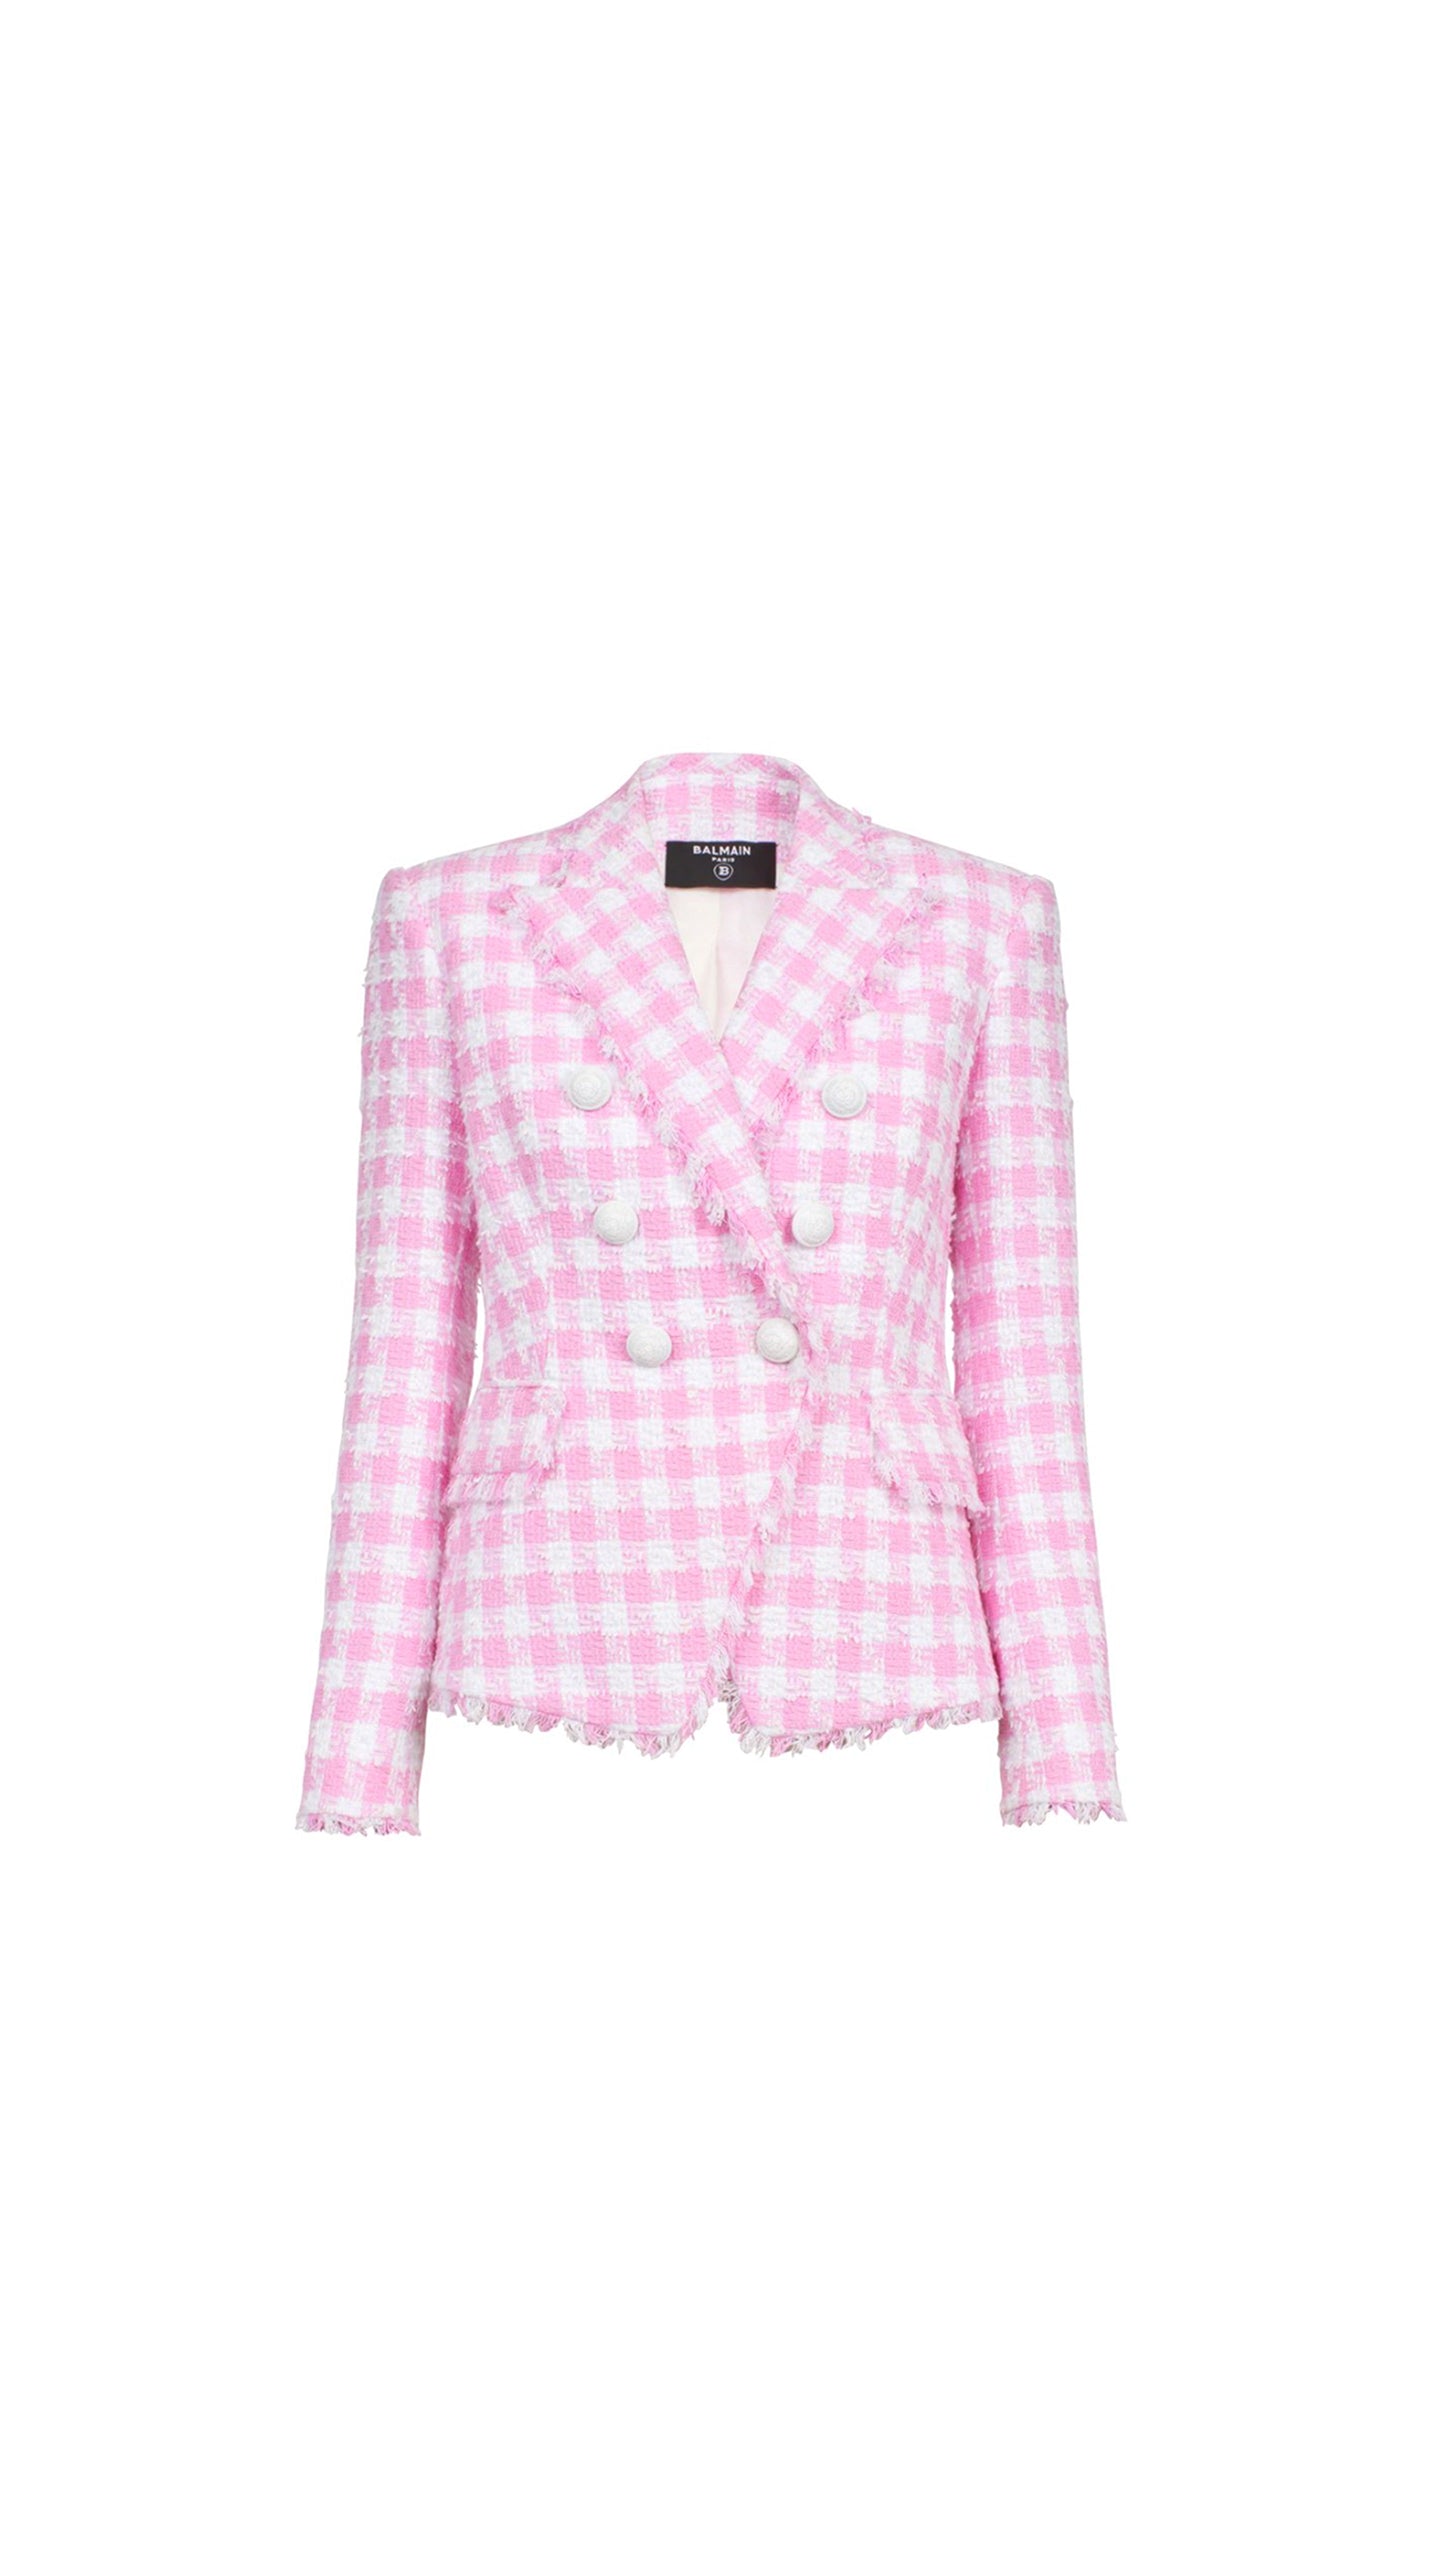 Gingham Print Tweed Jacket - Light Pink